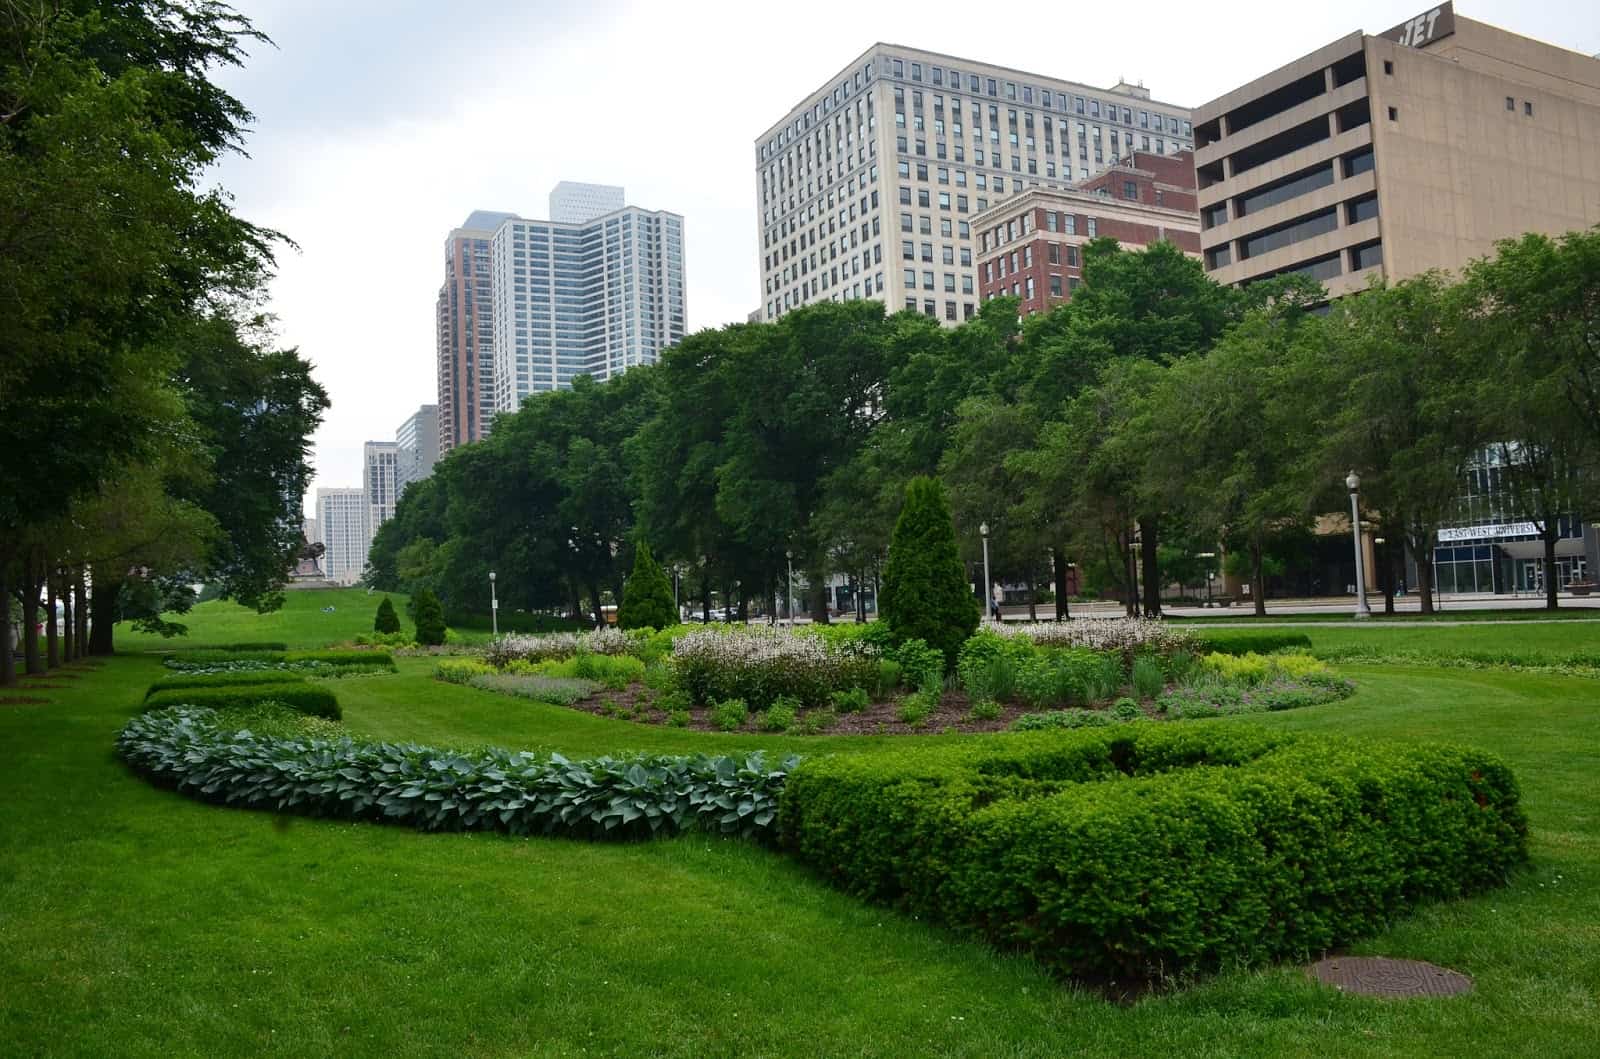 Grant Park in Chicago